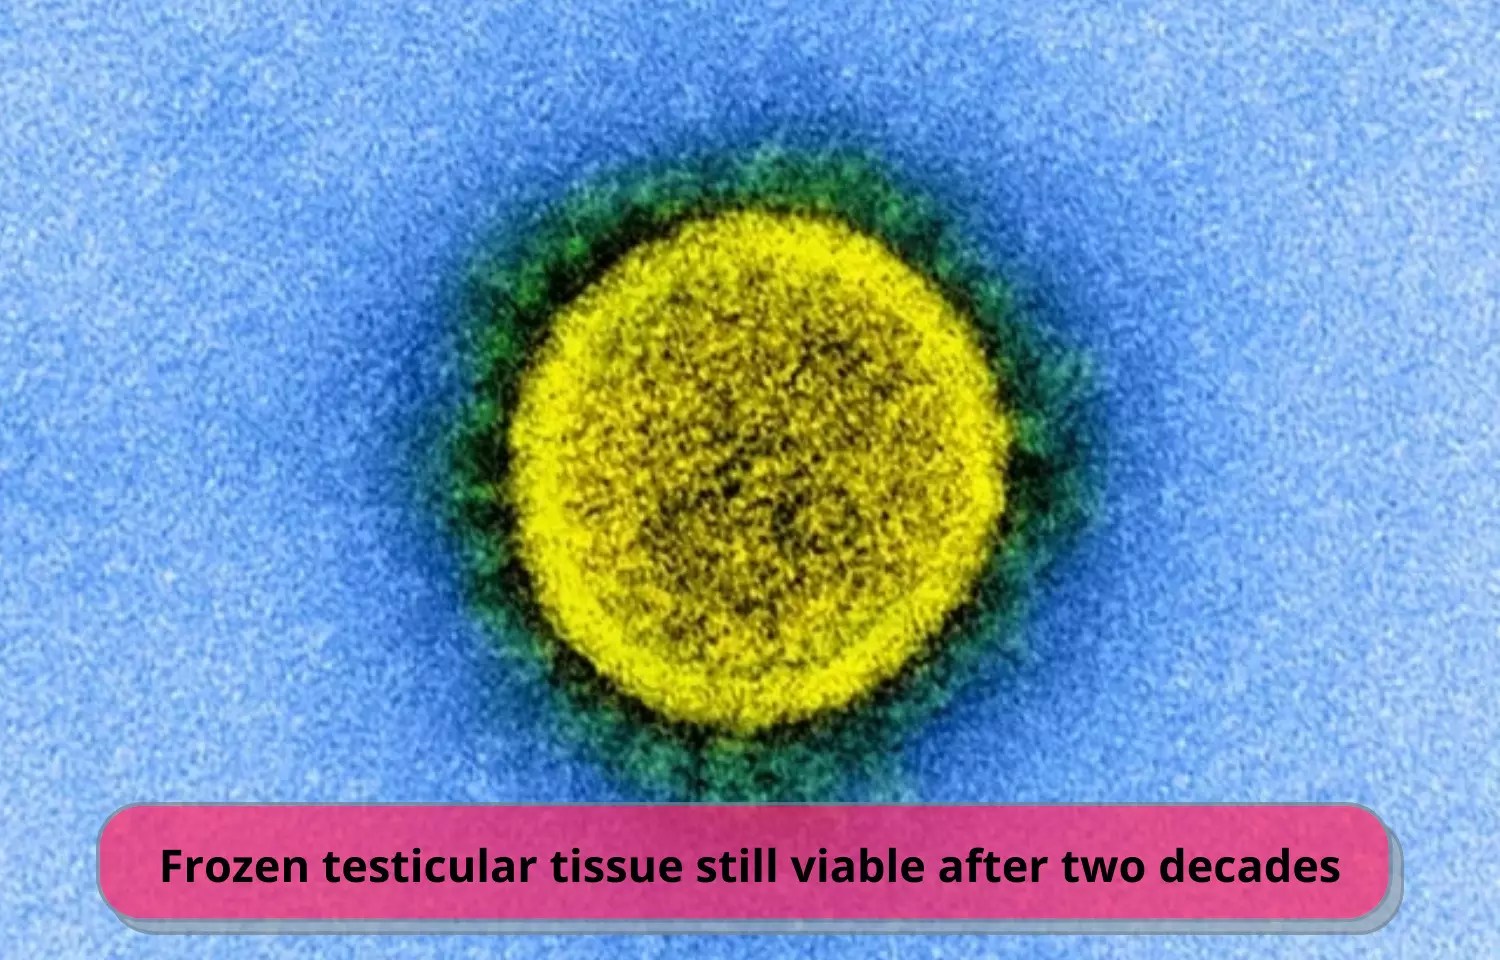 Journal Club - Frozen testicular tissue still viable after two decades